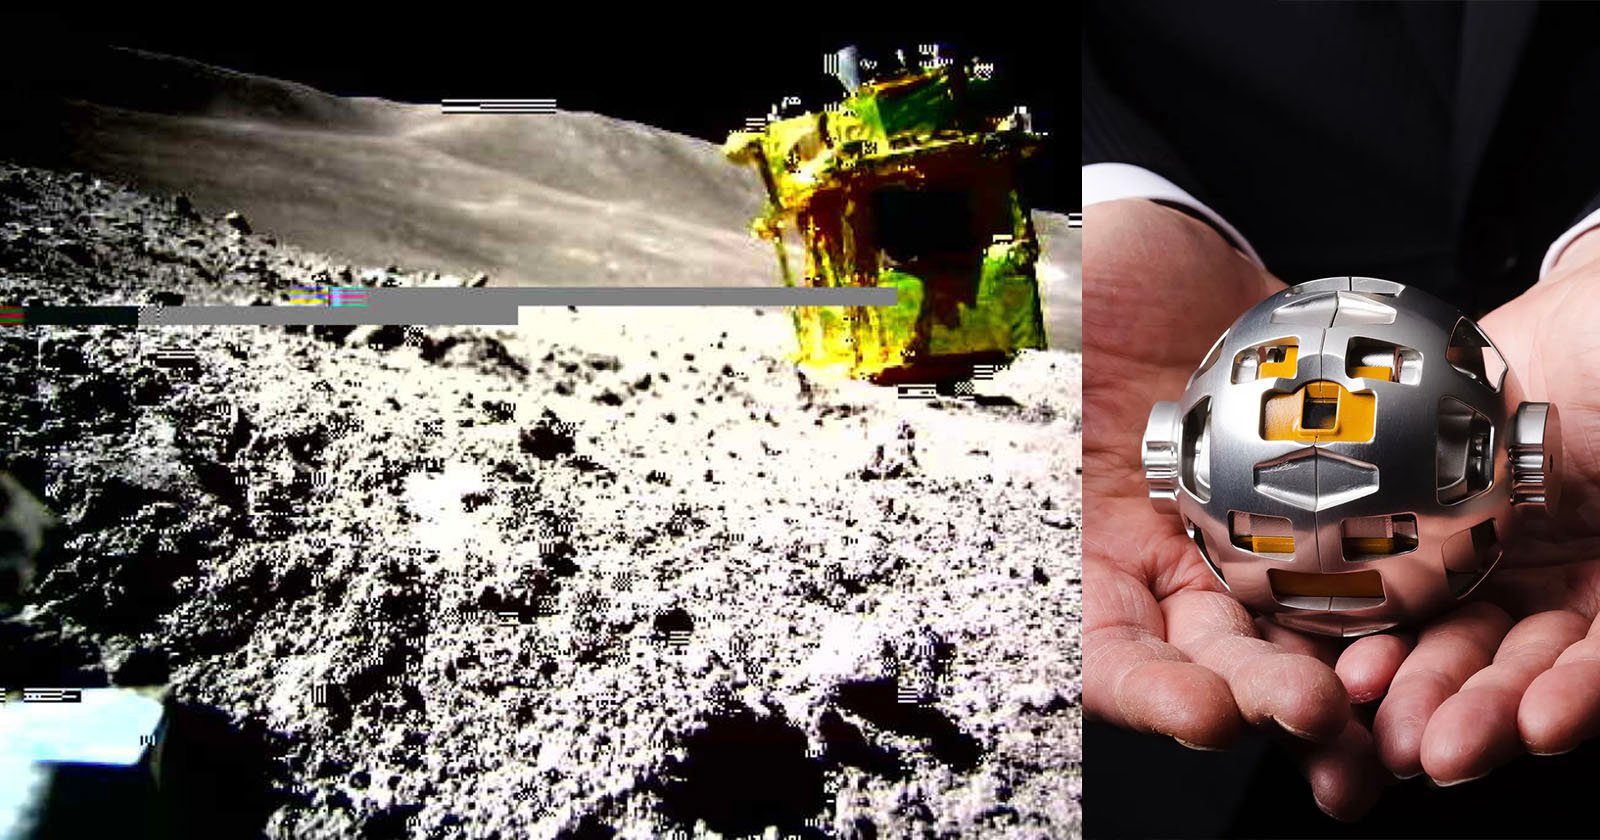  baseball-sized robot took photo japan moon lander 